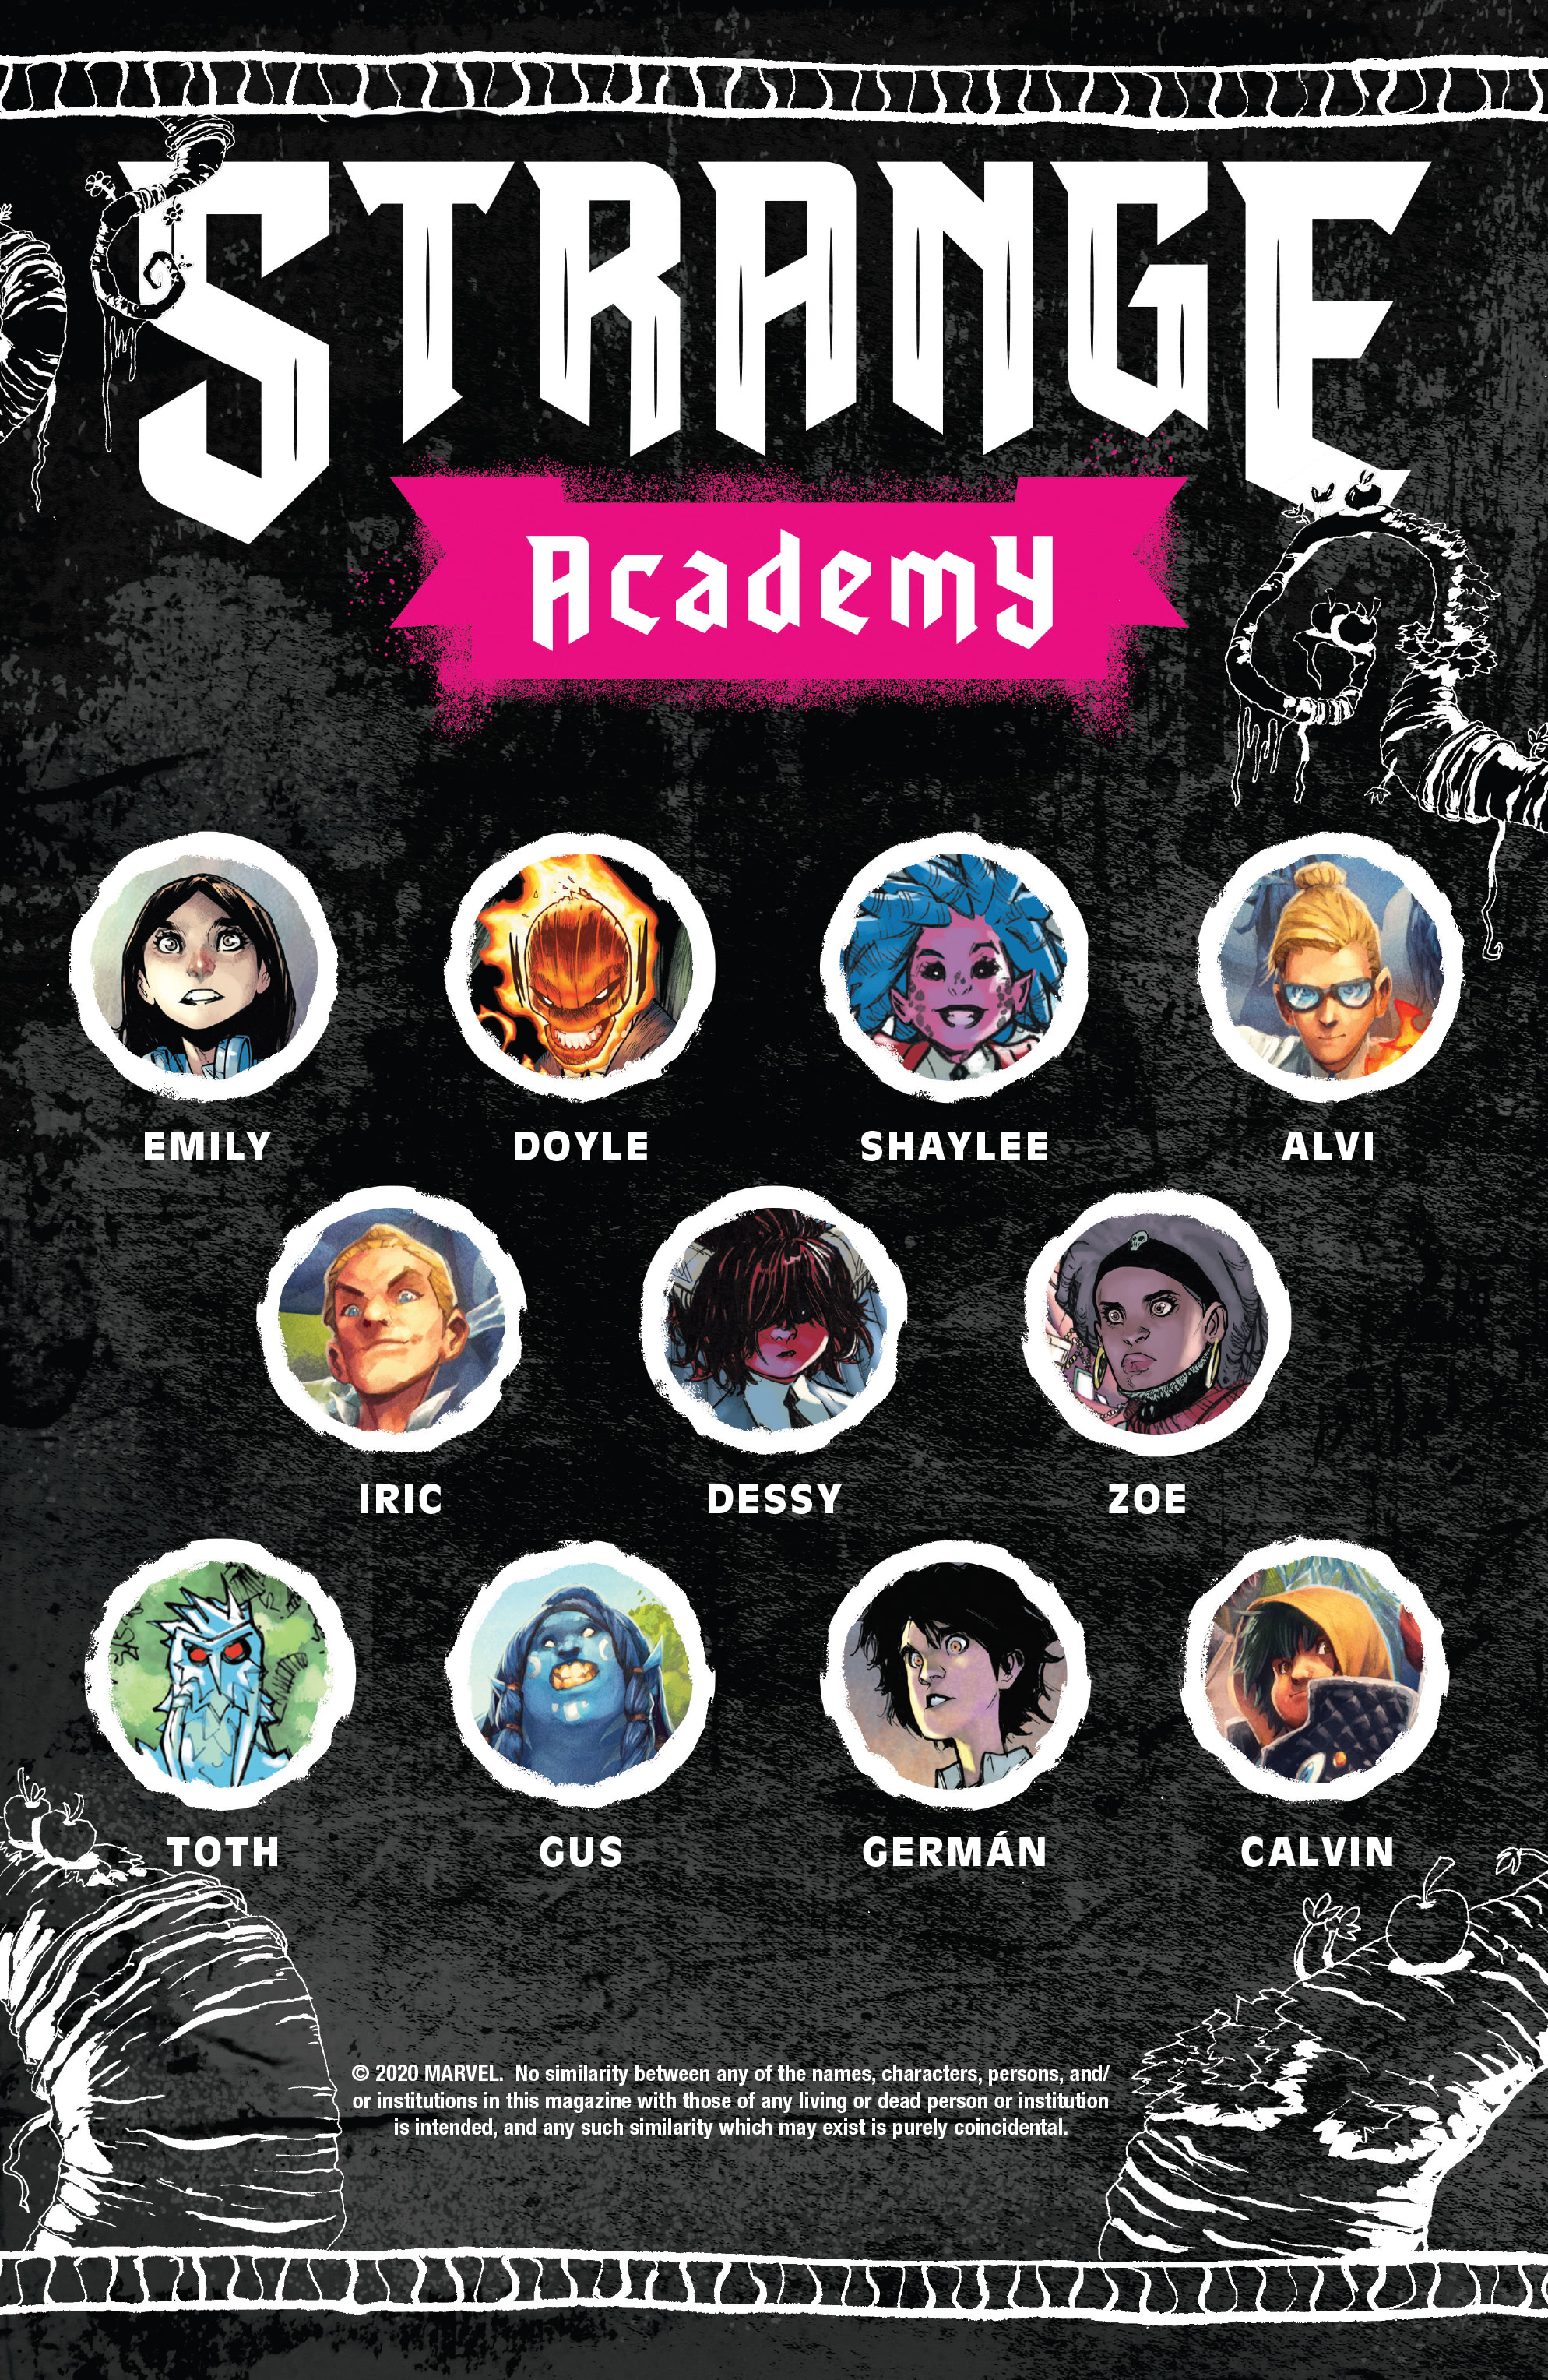 Read online Strange Academy comic -  Issue #6 - 21